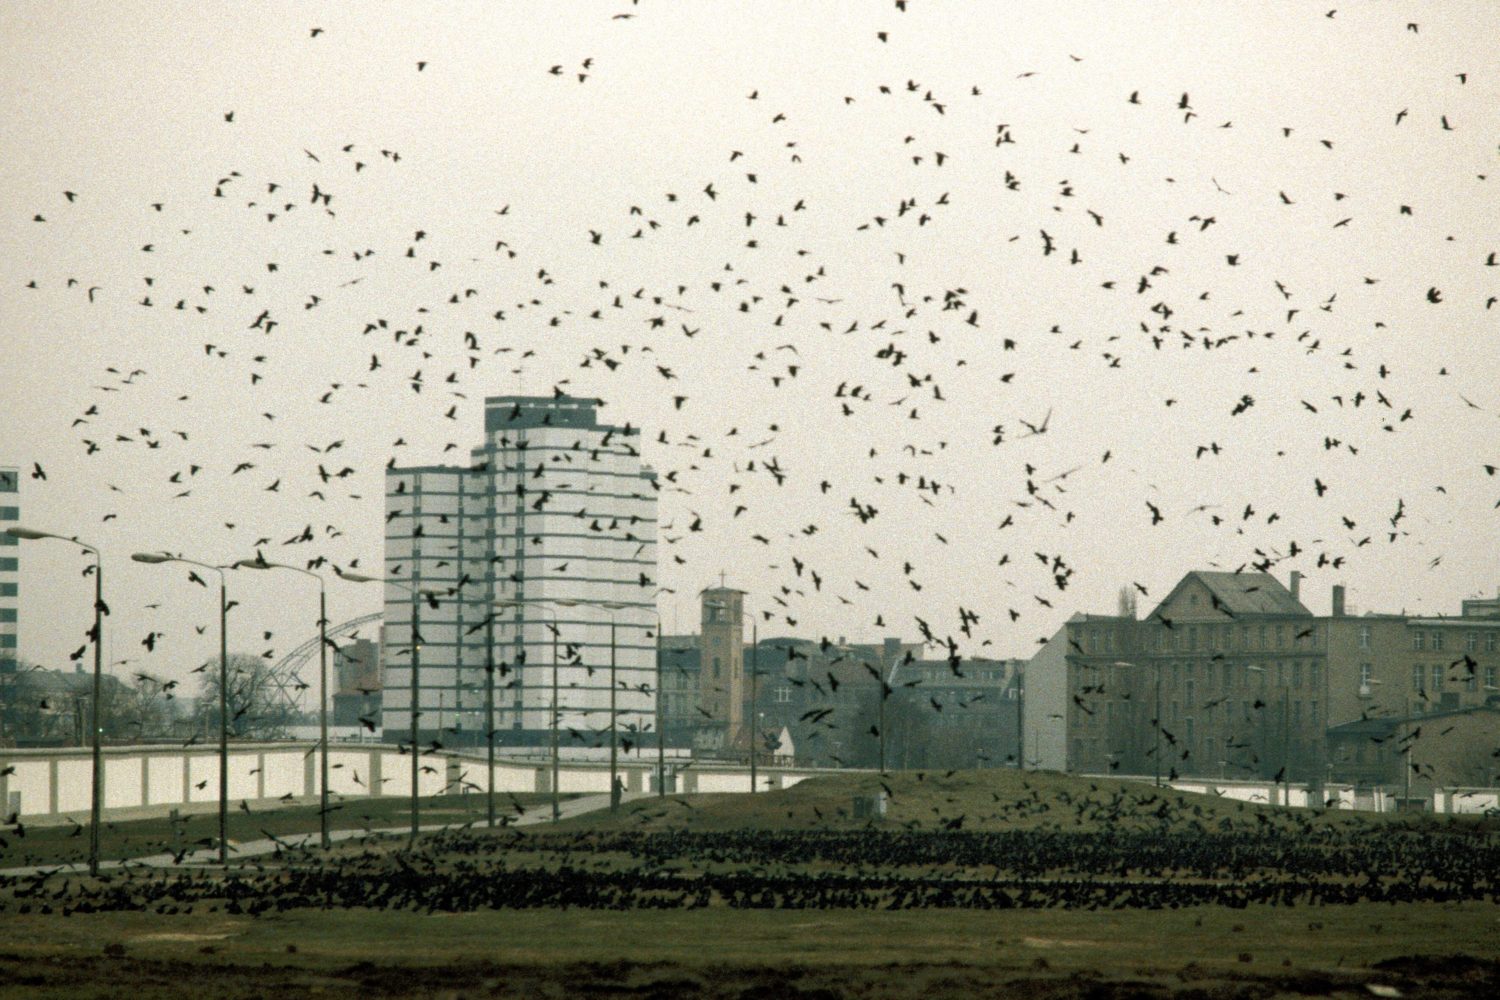 Vogelschwarm über dem leeren Potsdamer Platz, Januar 1990. Foto: Imago/Werner Schulze